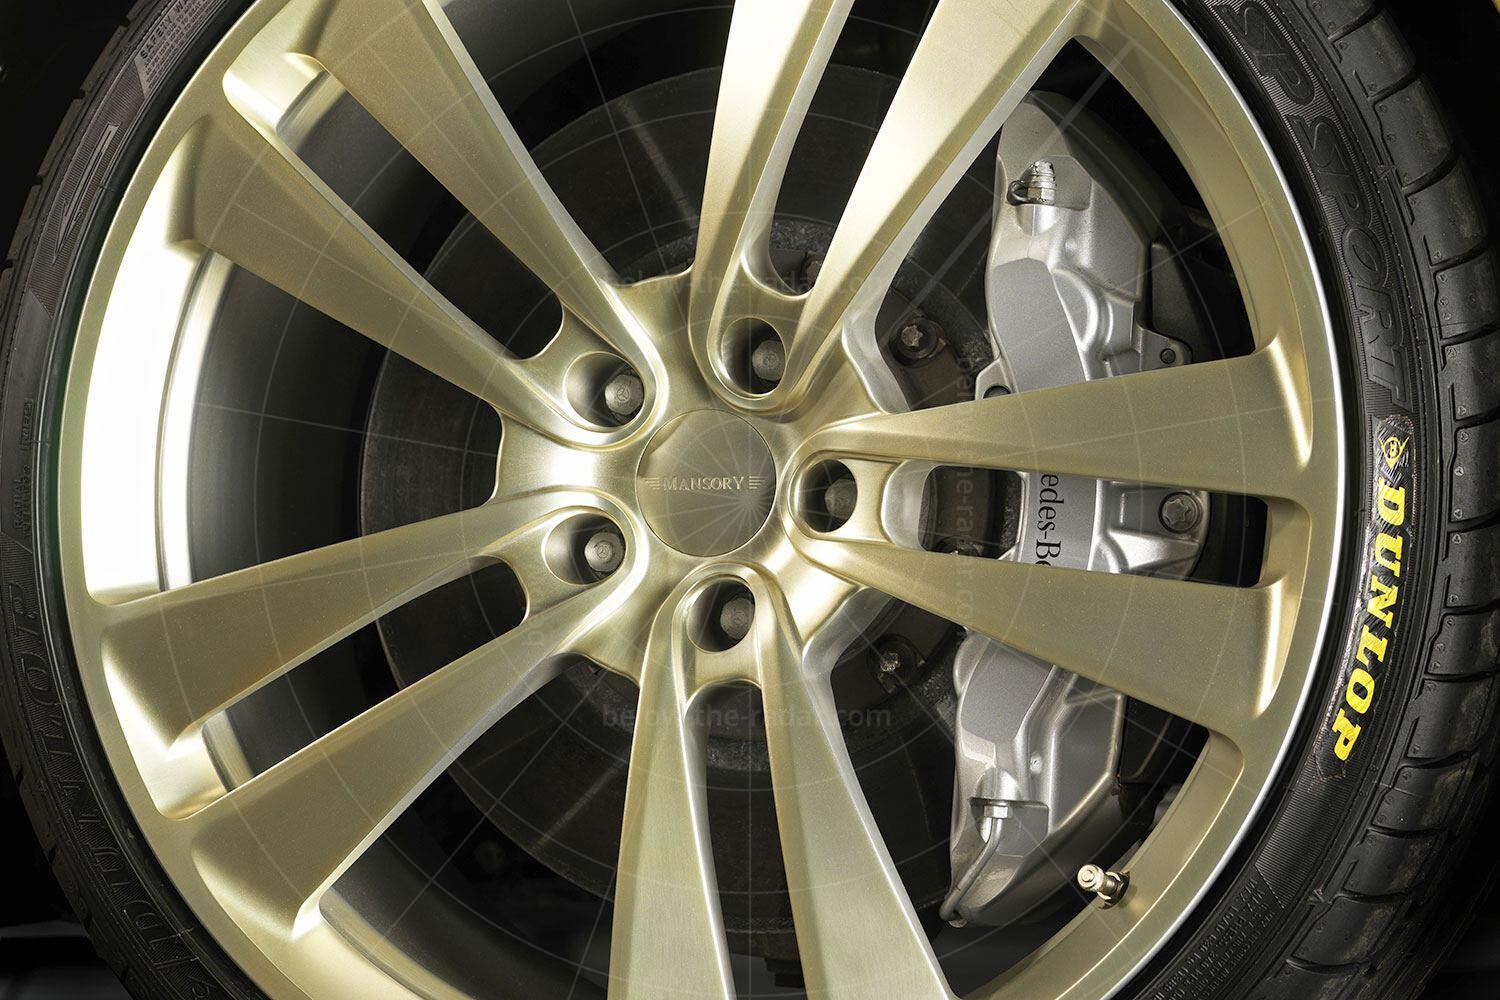 Mercedes SLR Mansory Renovatio - forged alloy wheel Pic: Mansory | Mercedes SLR Mansory Renovatio - forged alloy wheel